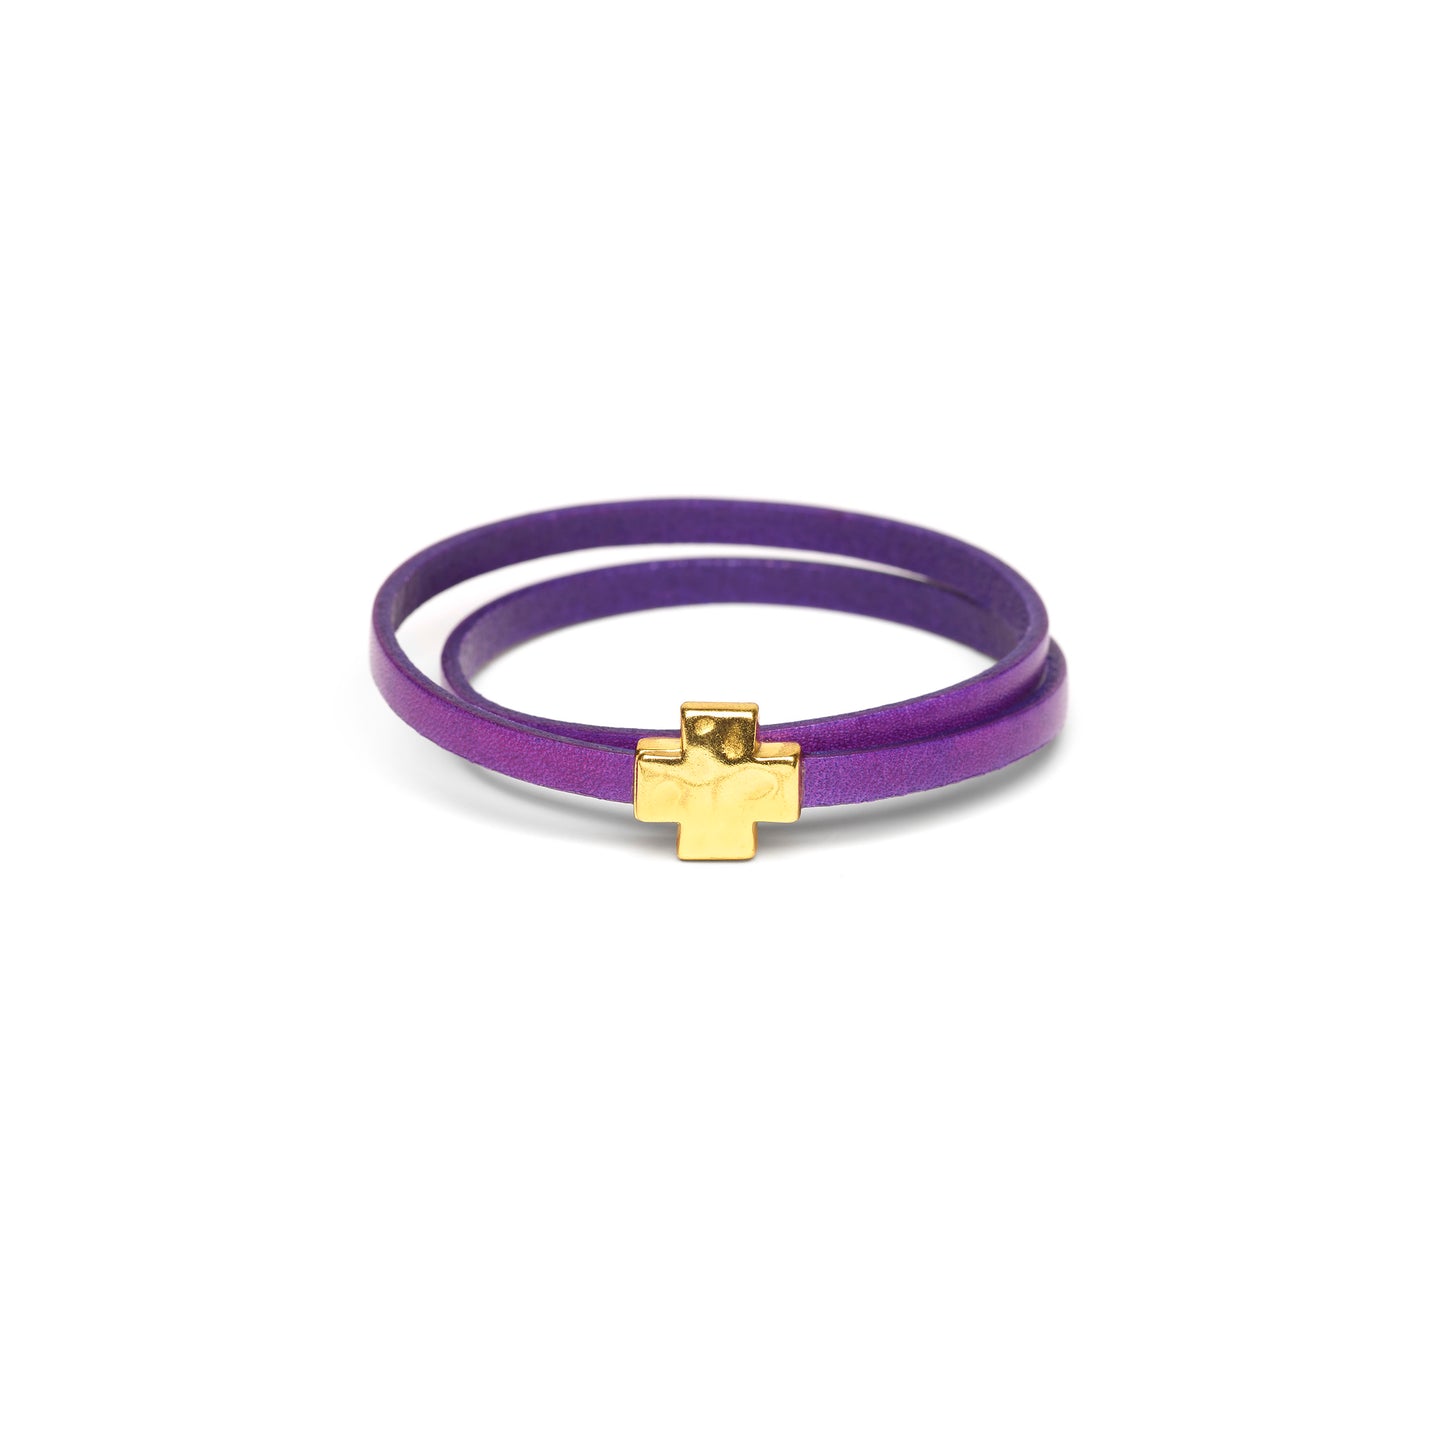 "Wrap it Up Bracelet" with Gold Cross - Double Length - Purple